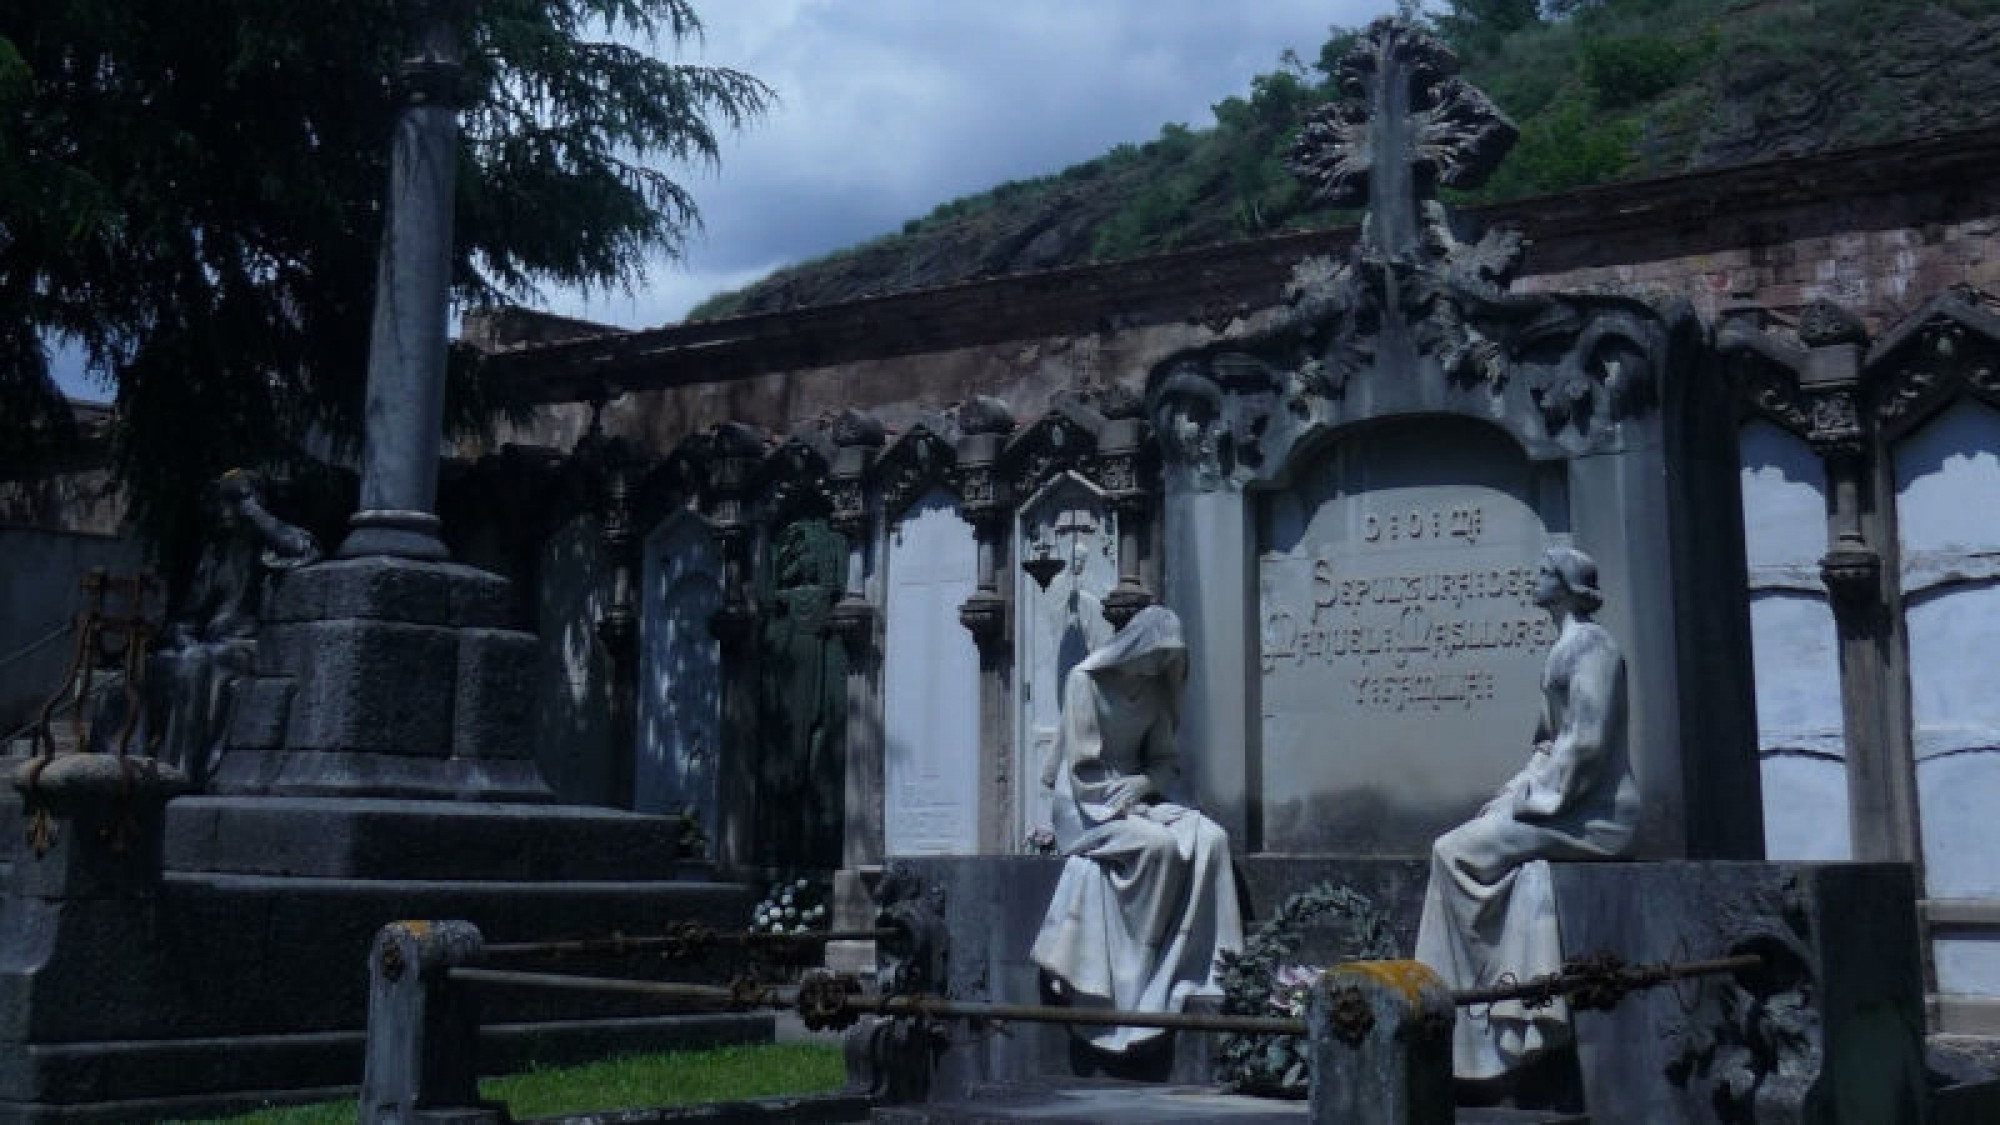 Cementiri Municipal d'Olot